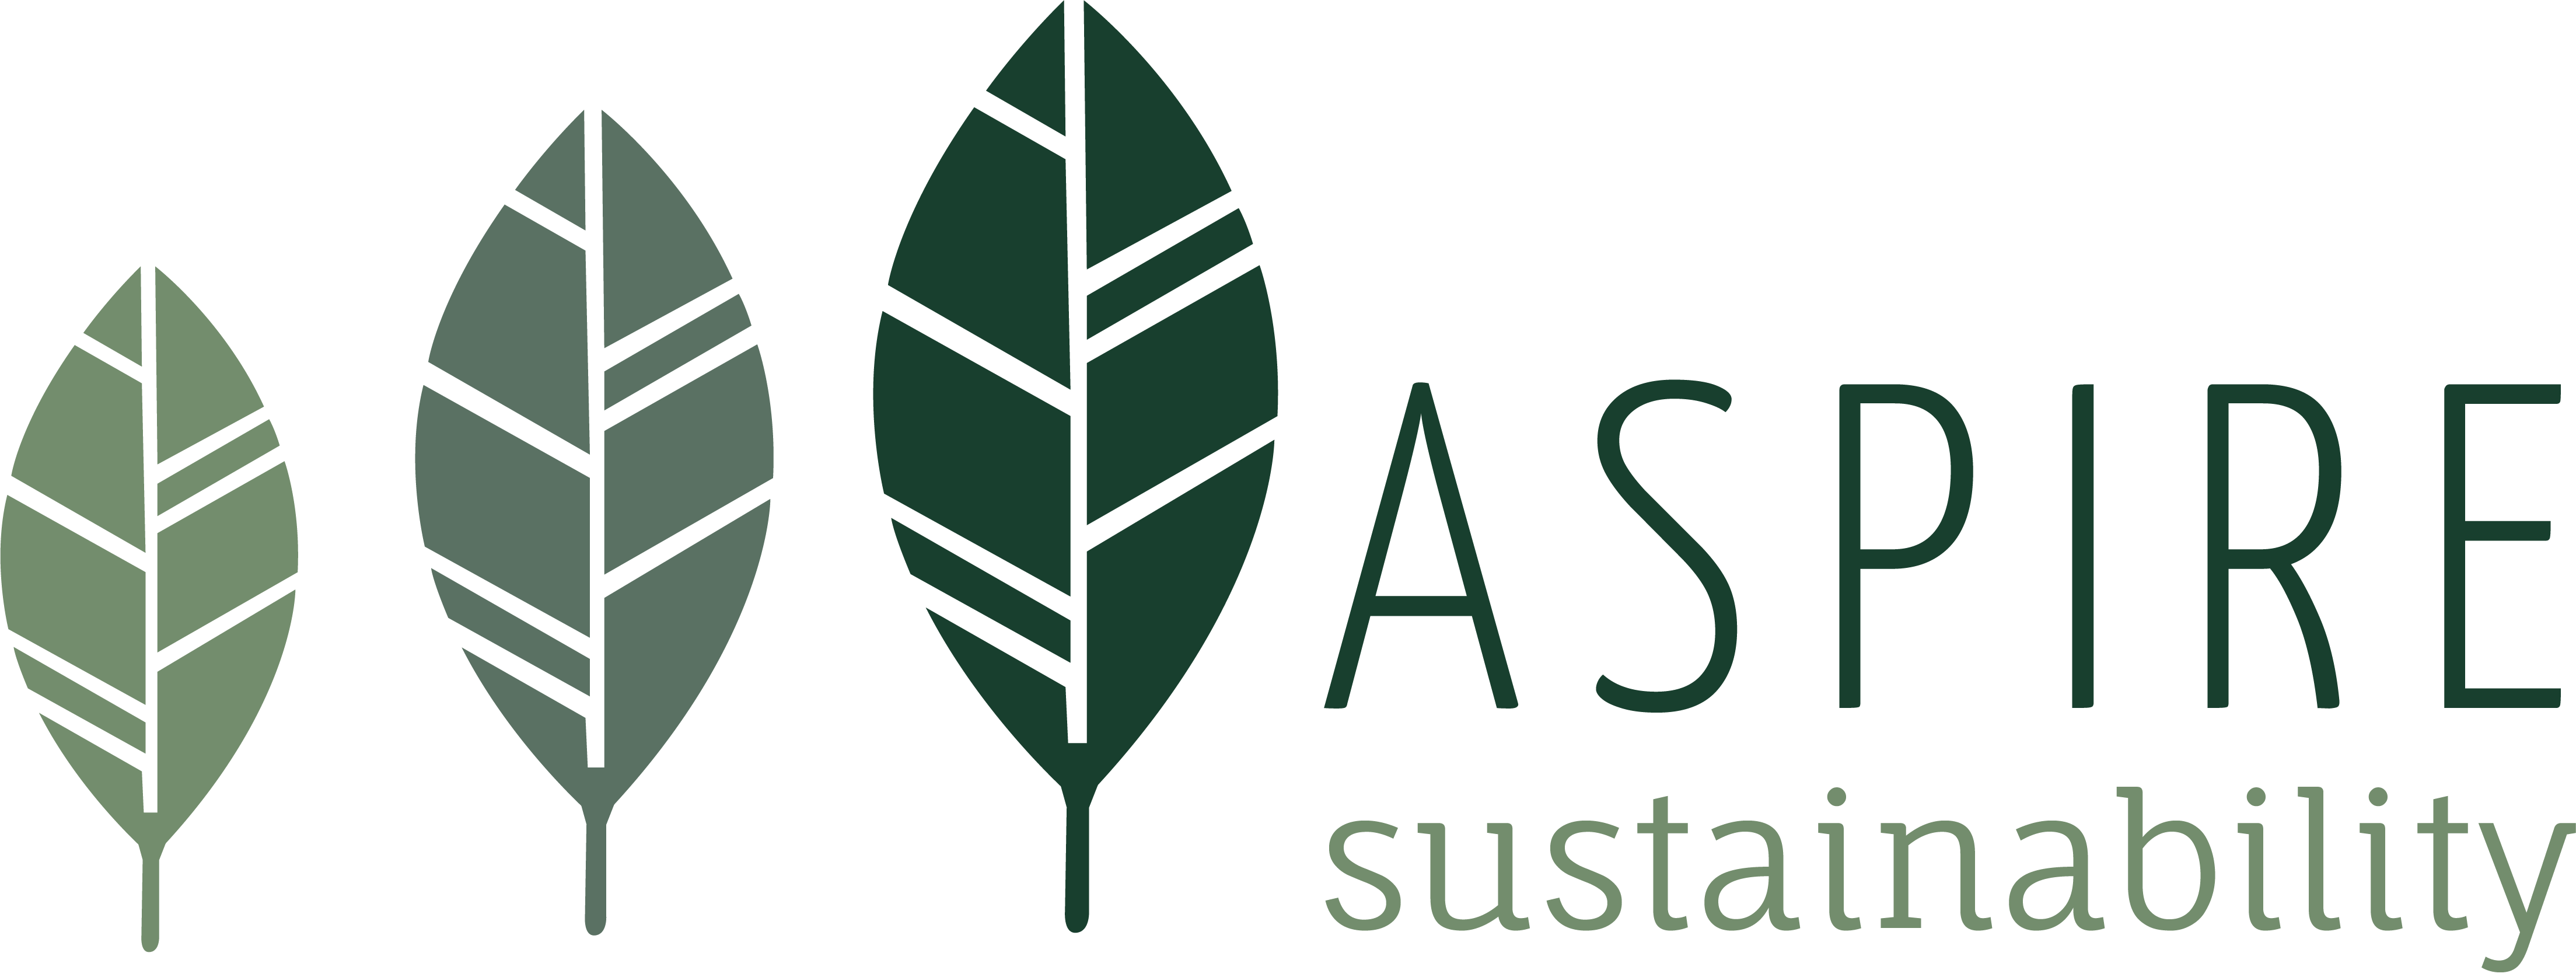 Sustainability Logo - Aspire Sustainability Cycle Assessment and Sustainability